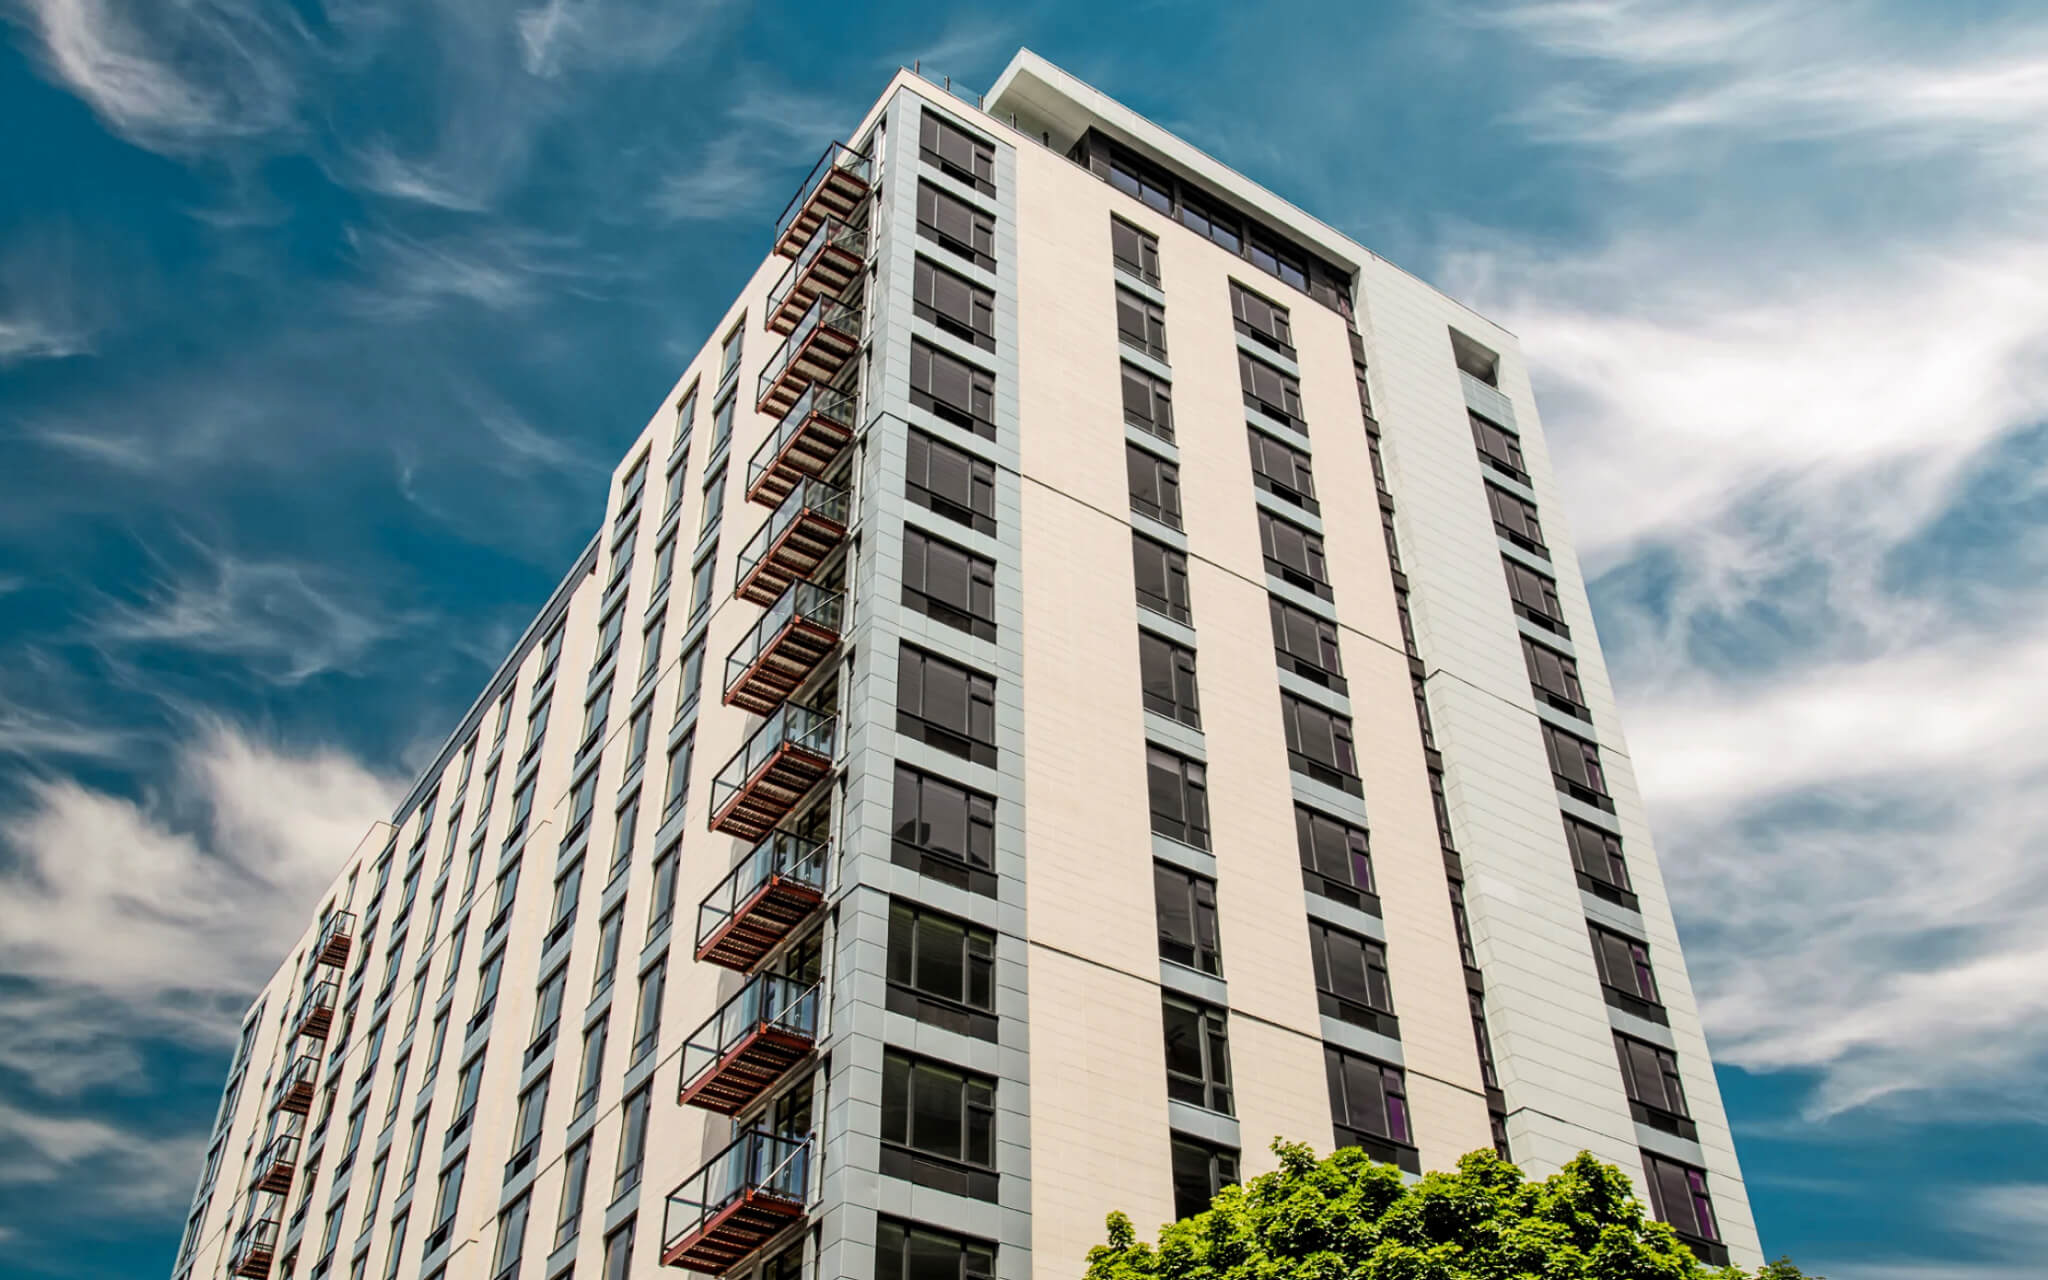 Paragon Corporate Housing - Sky3 Apartments - Portland Oregon